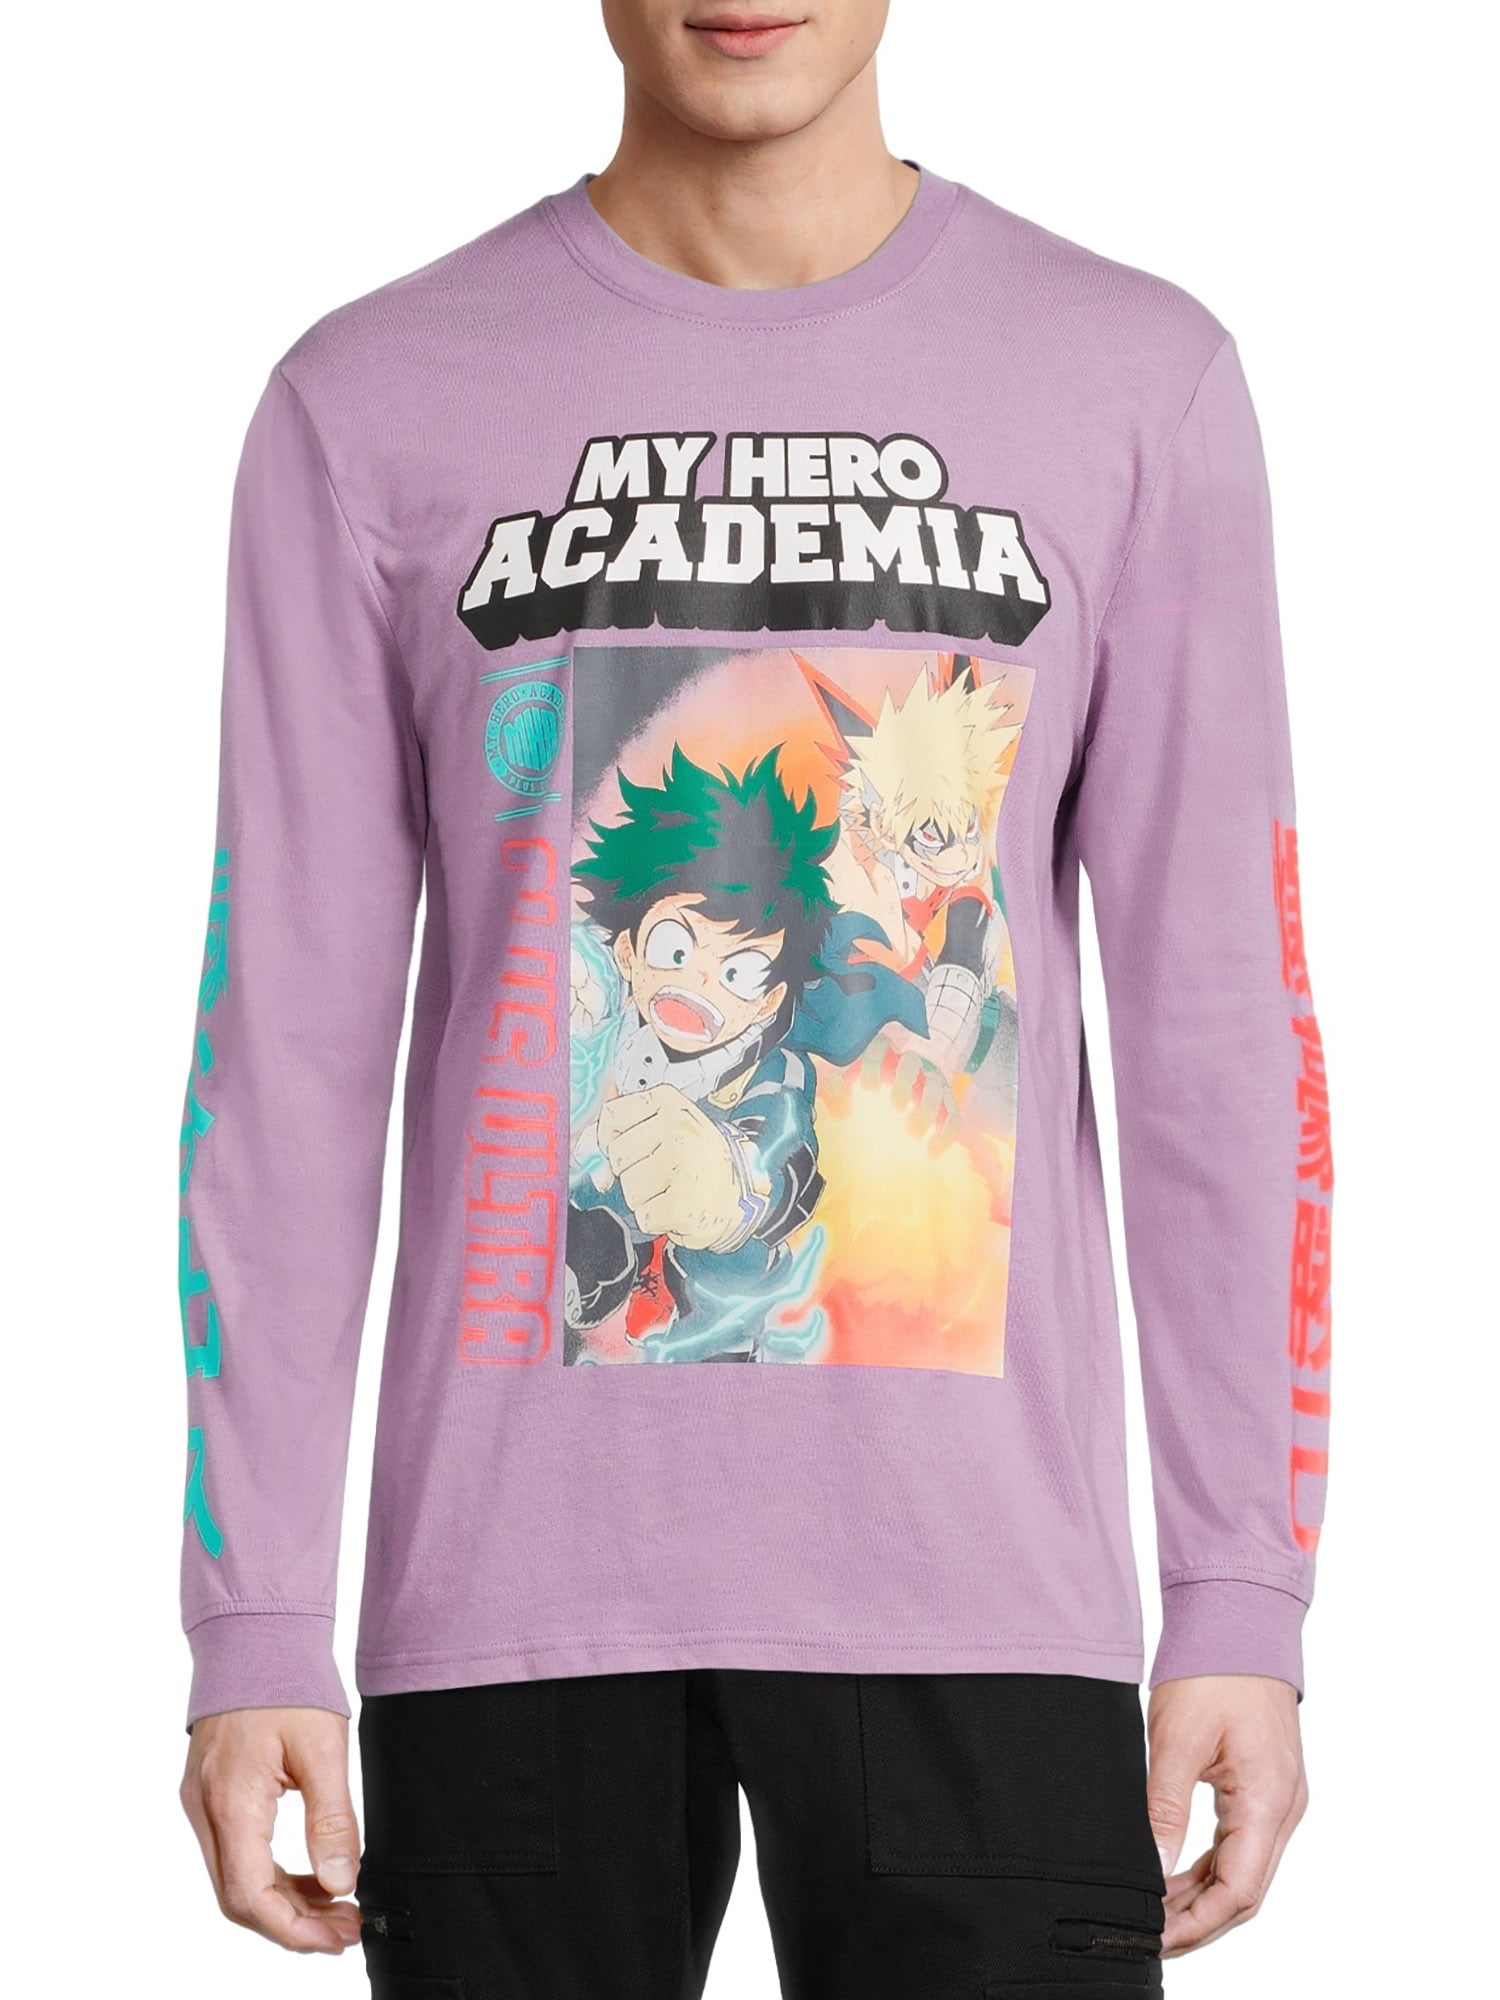 Anime Long Sleeve TShirts for Sale  TeePublic